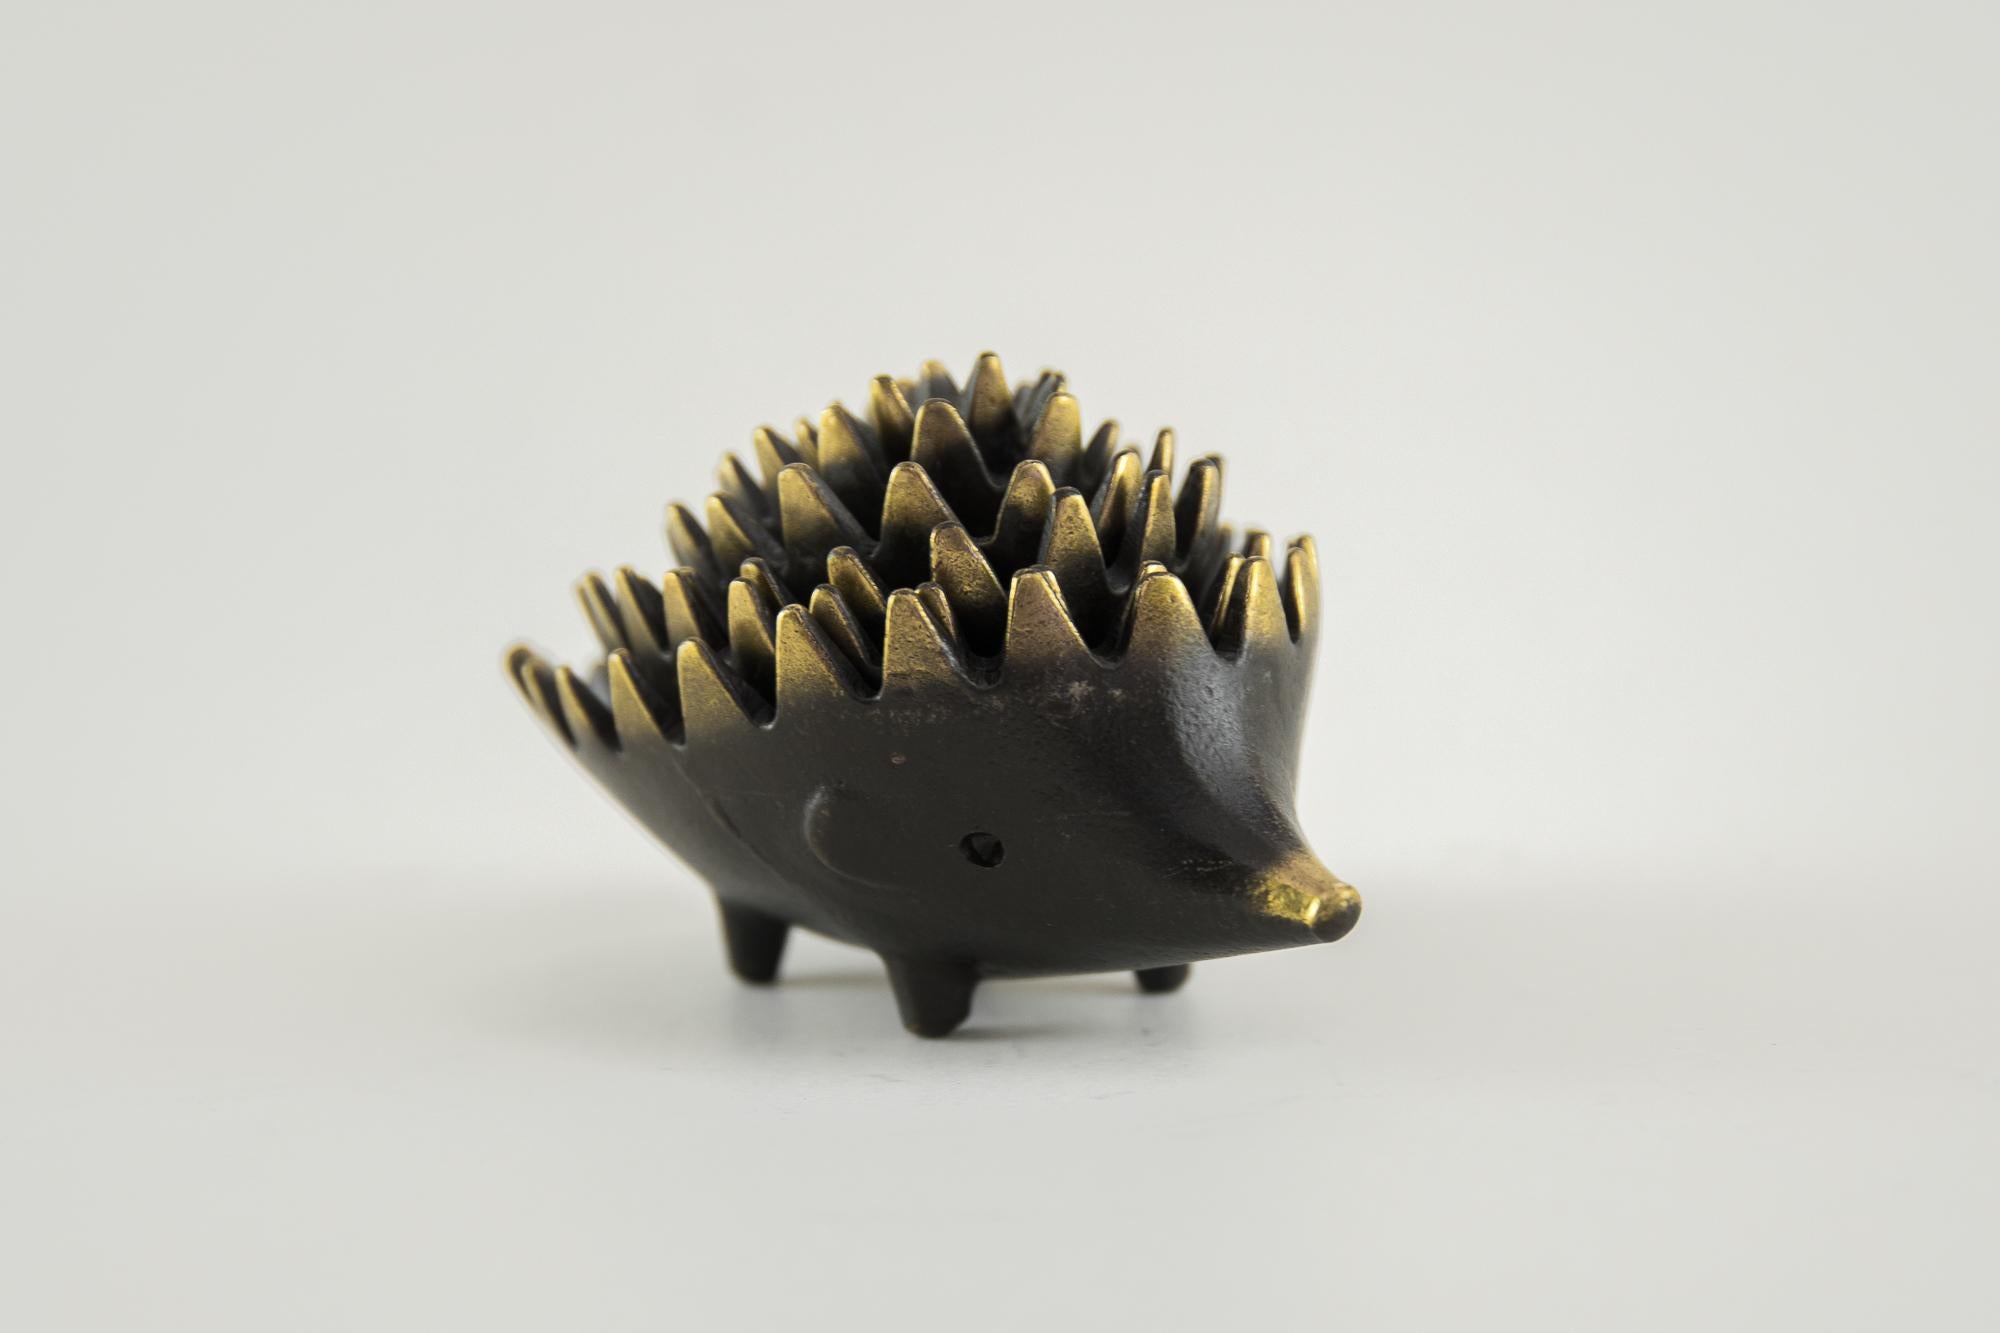 Hedgehog by Walter Bosse for Hertha Baller, circa 1950s
Original condition.